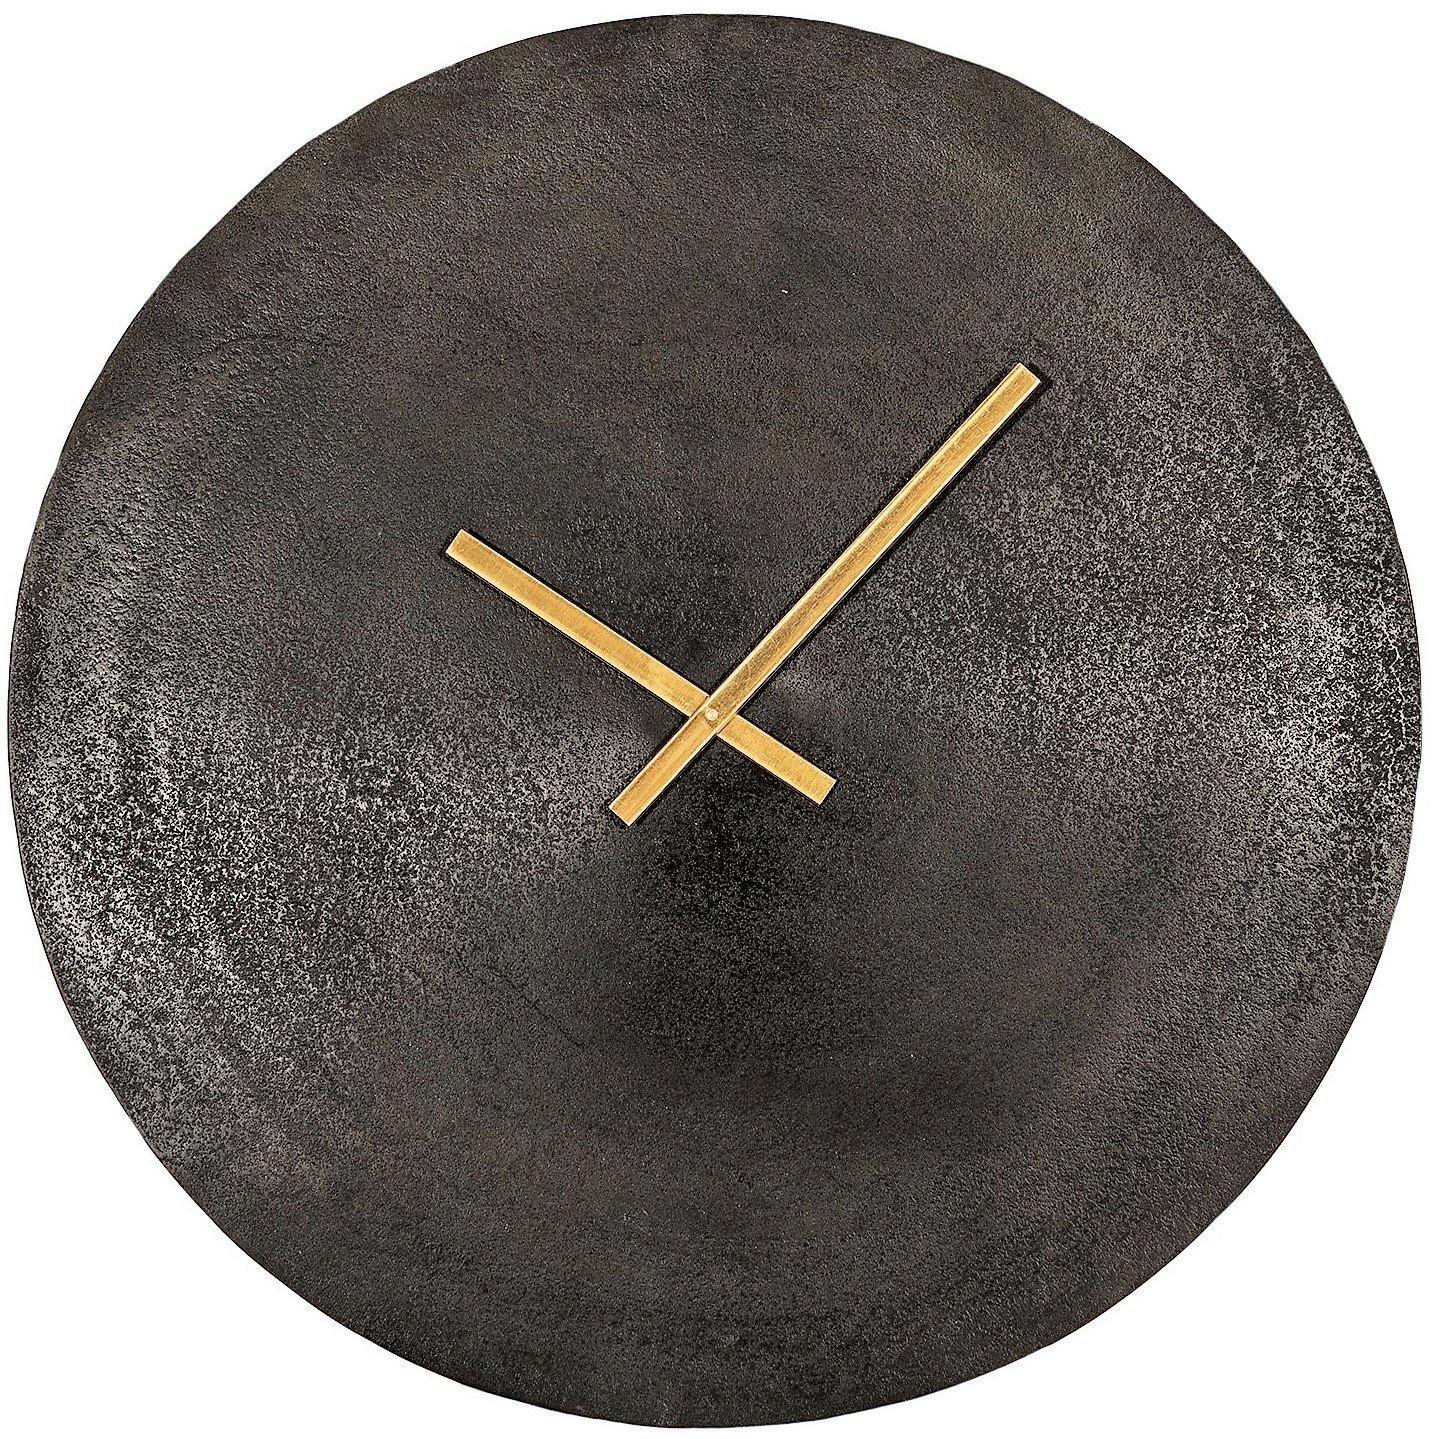 Lounge Styles j&k imports Wall Clock Black Antique Finish Metal Vintage 74cm - NEW !!